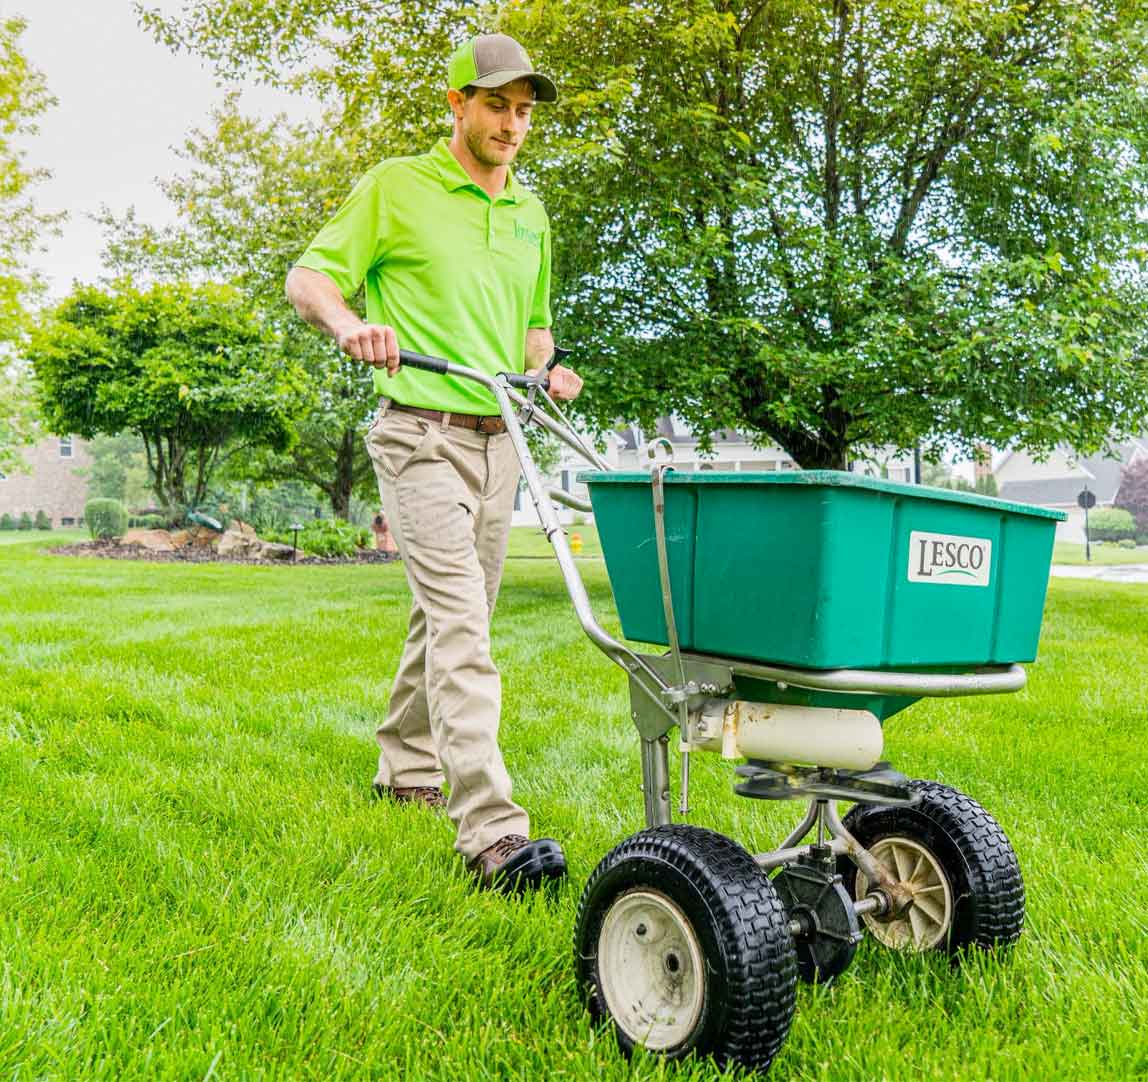 Green group employee pushing a cart across a lawn to spread fertilizer